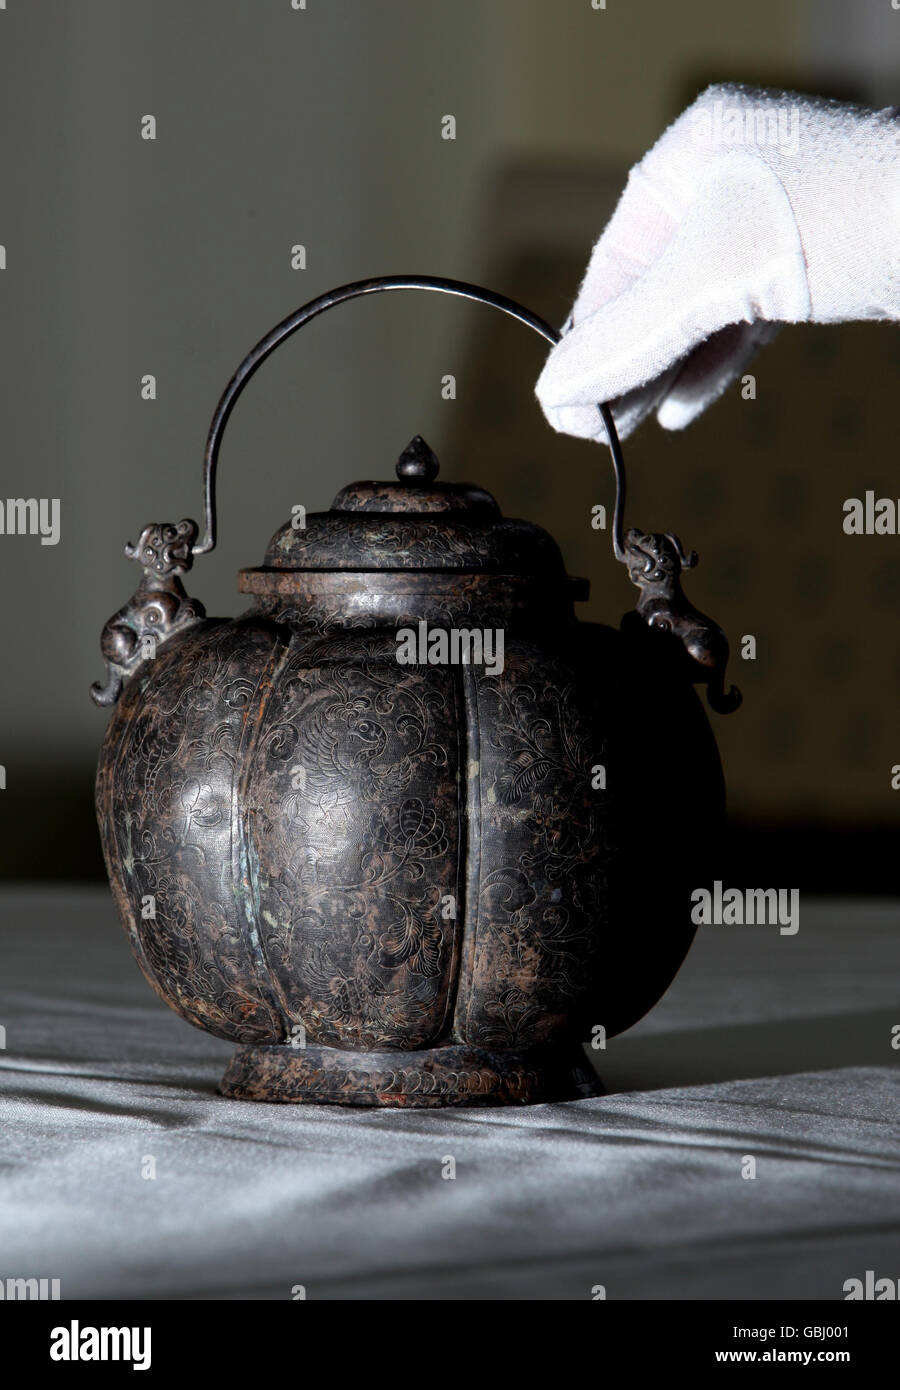 Tang vase found amongst bric-a-brac Stock Photo